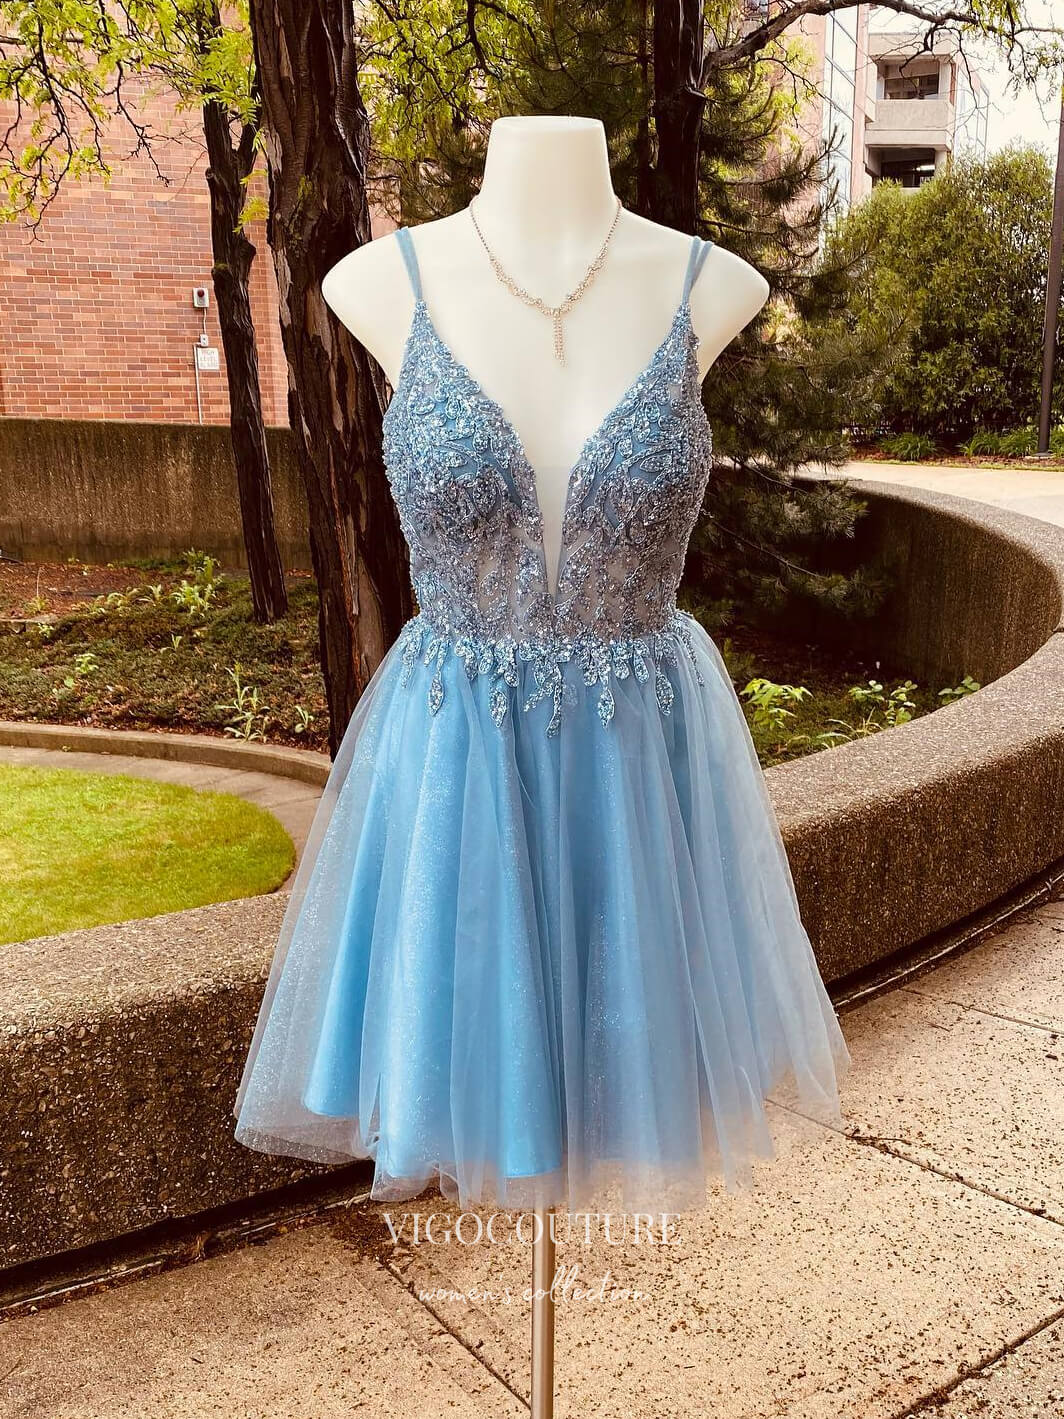 vigocouture-Sparkly Sequin Hoco Dresses Spaghetti Strap Graduation Dresses hc188-Prom Dresses-vigocouture-Light Blue-US0-